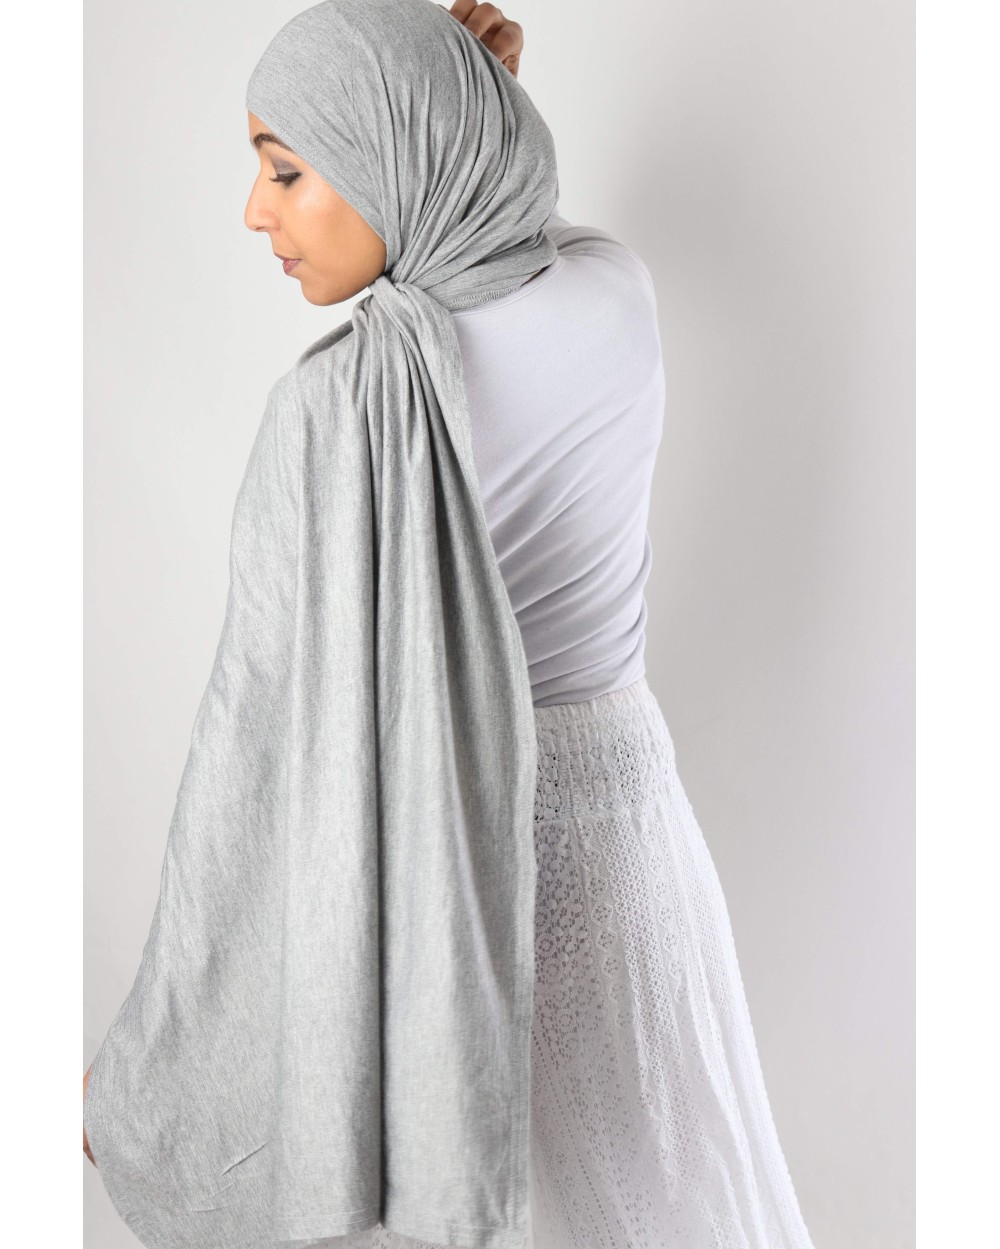 Maxi hijab Jersey Premium